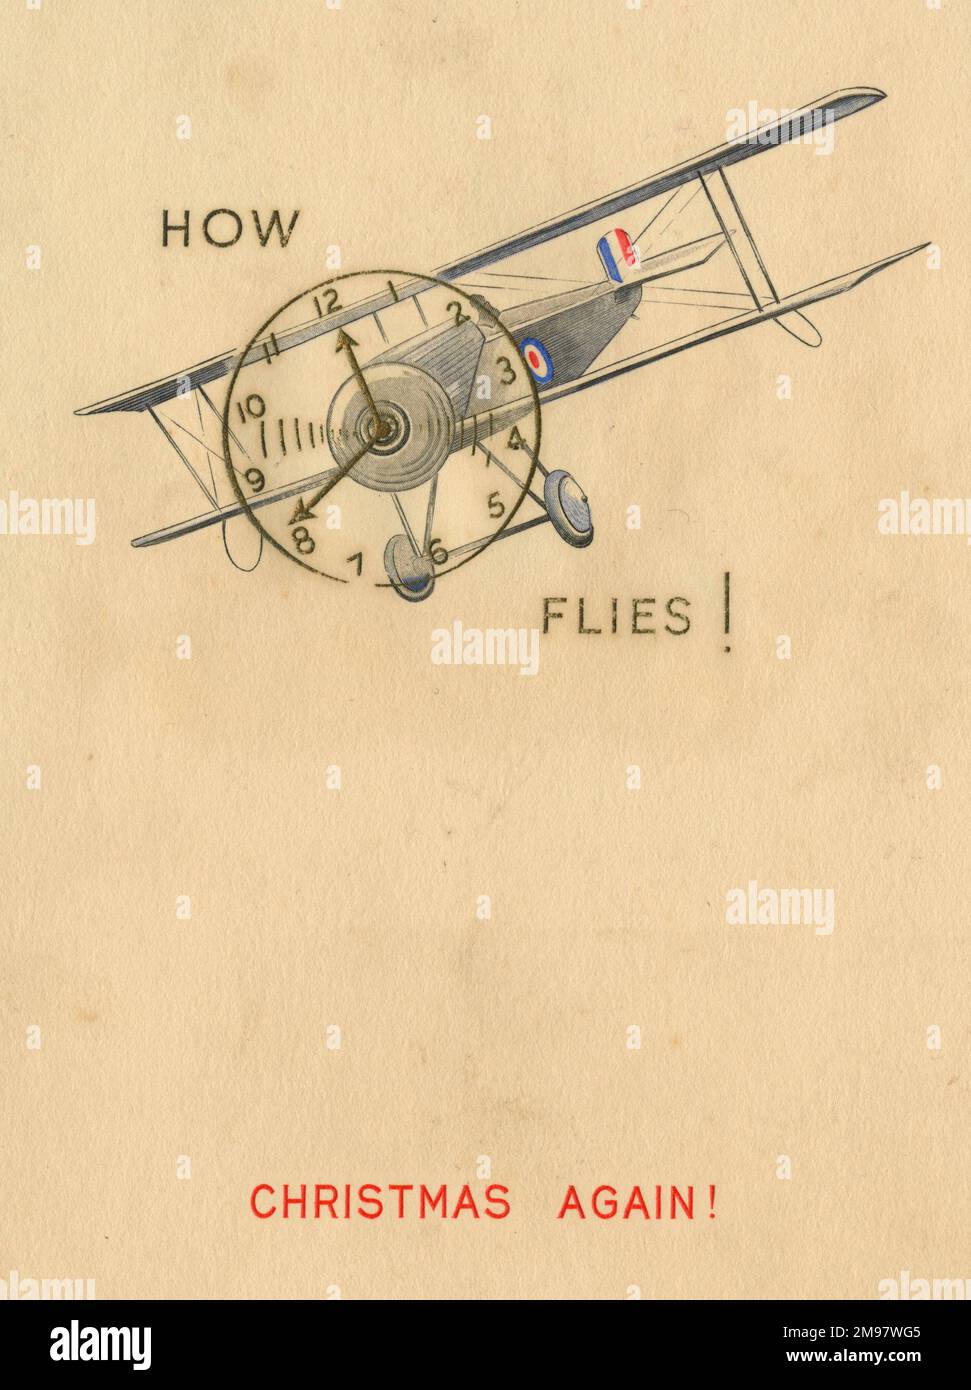 Christmas card - First World War biplane -- How Time Flies. Stock Photo